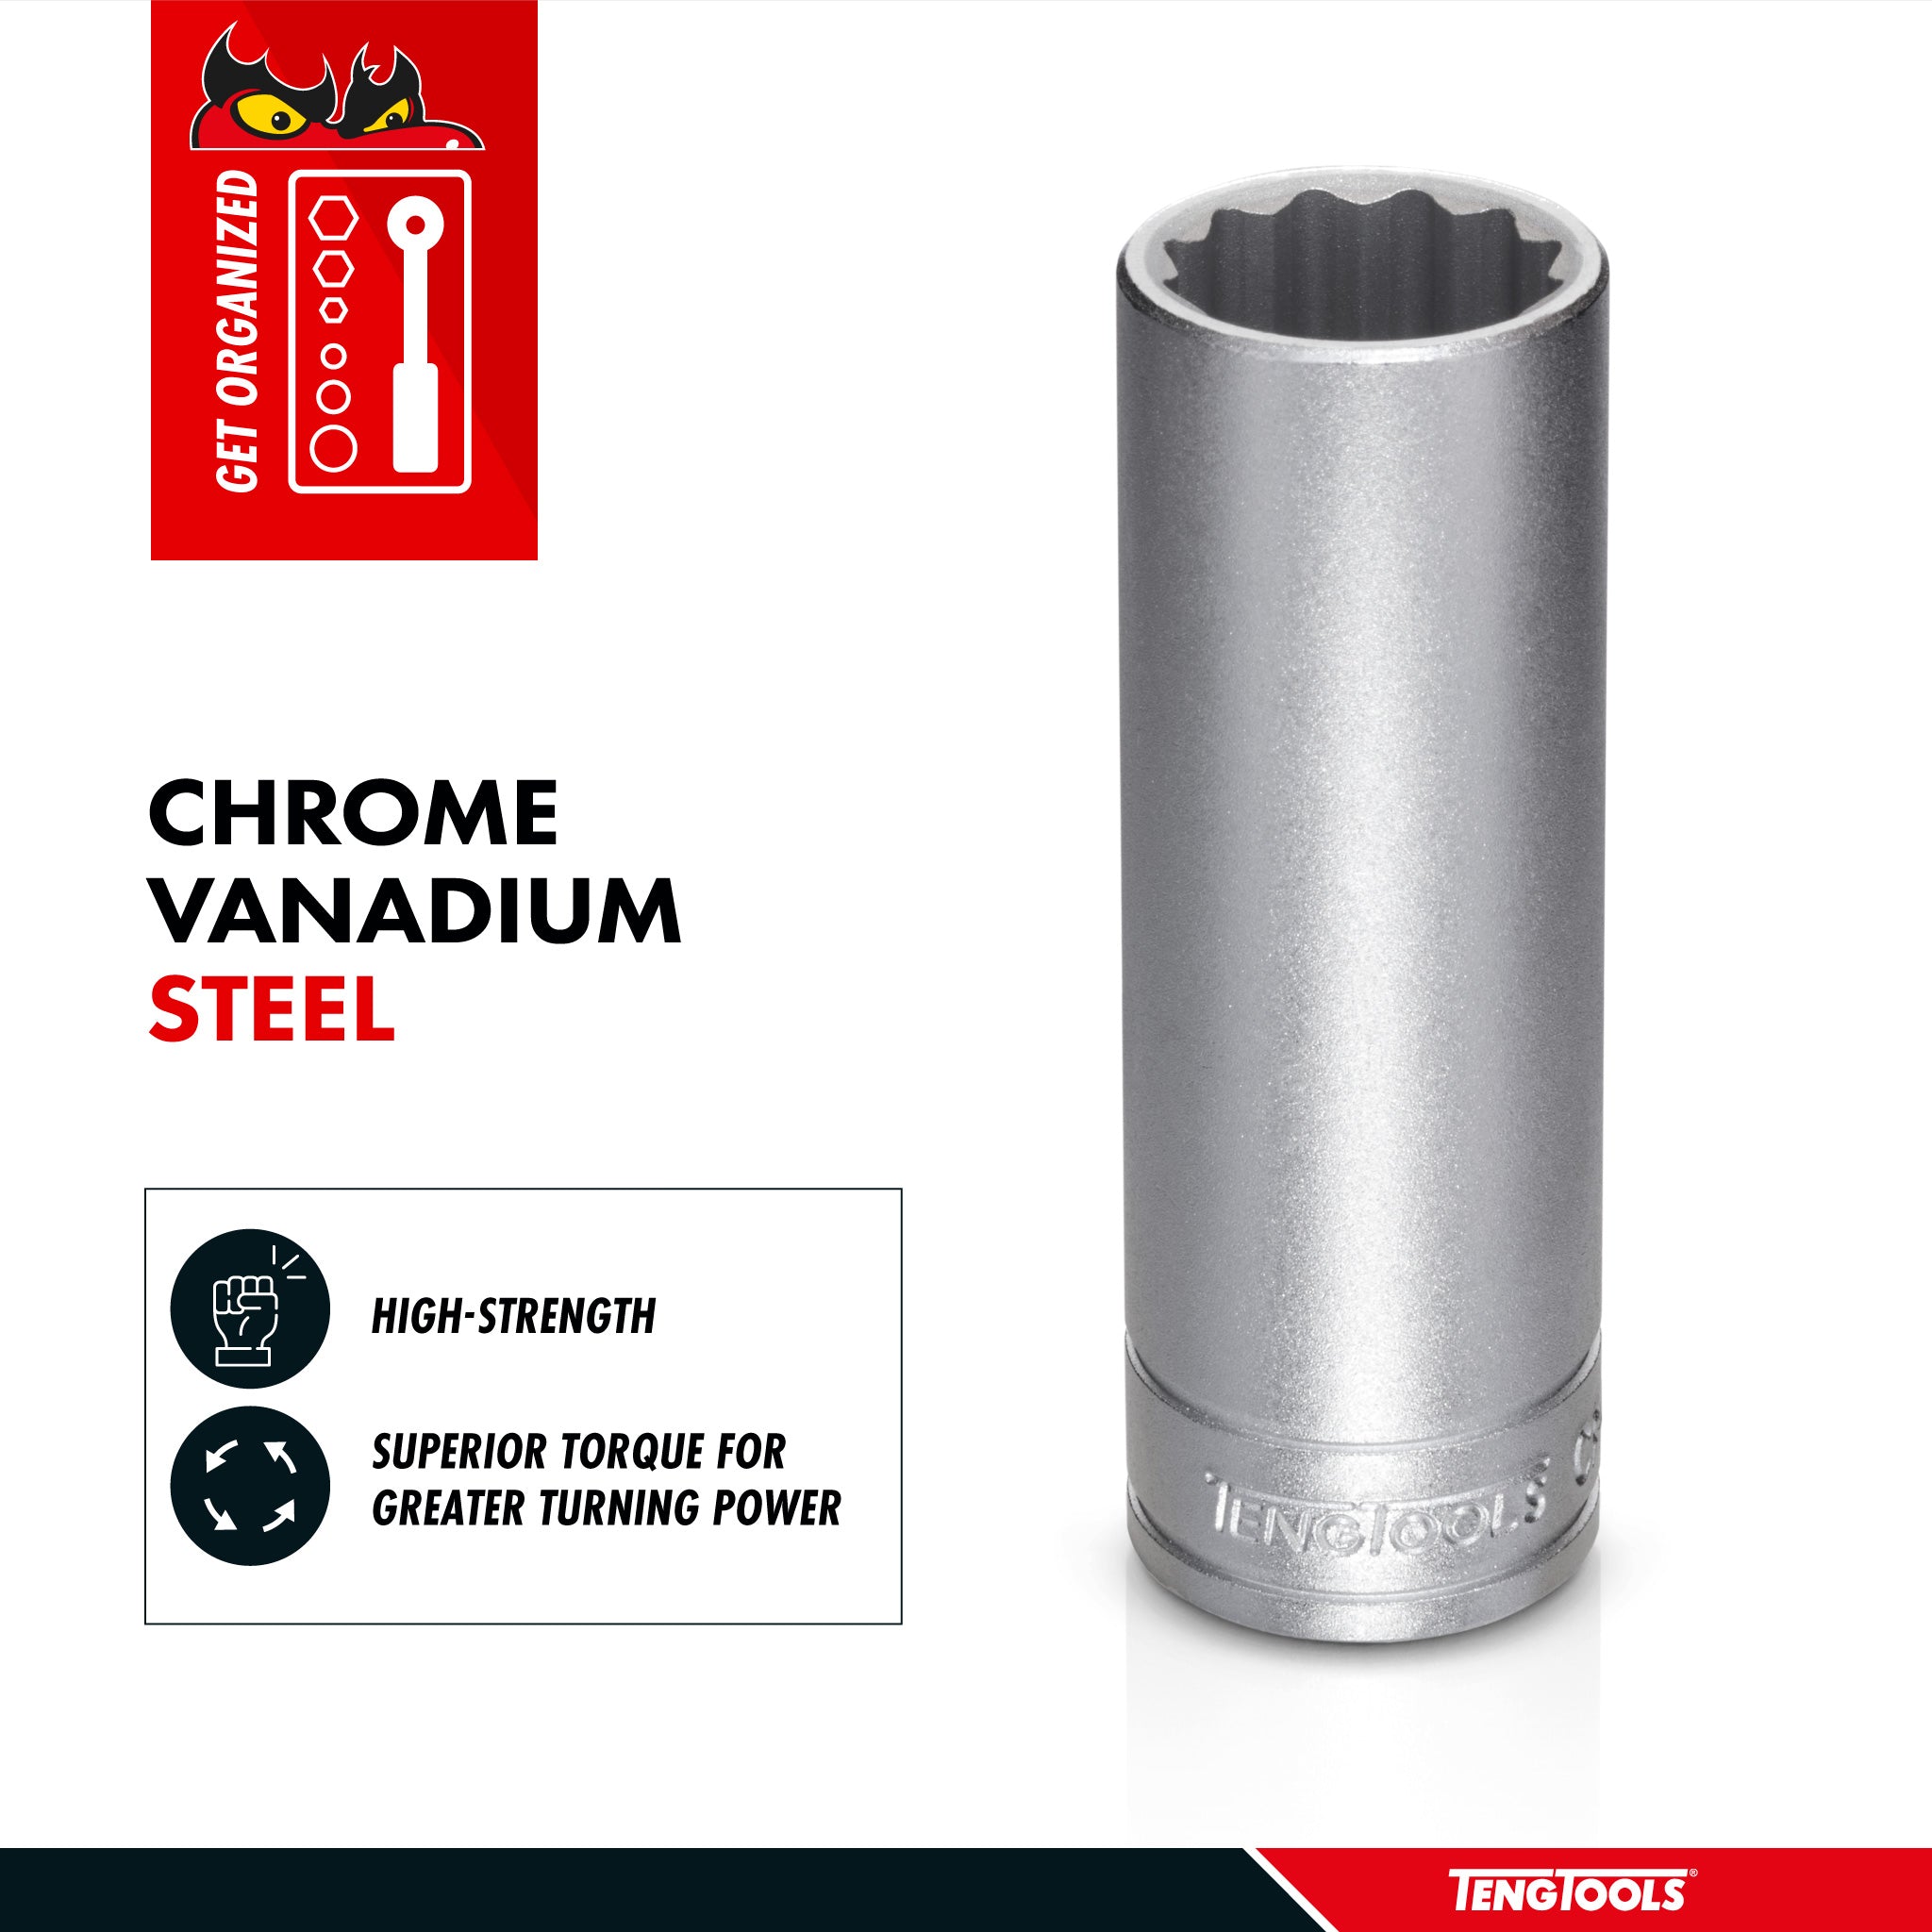 Teng Tools 1/2 Inch Drive 12 Point Metric Deep Chrome Vanadium Sockets - 32mm